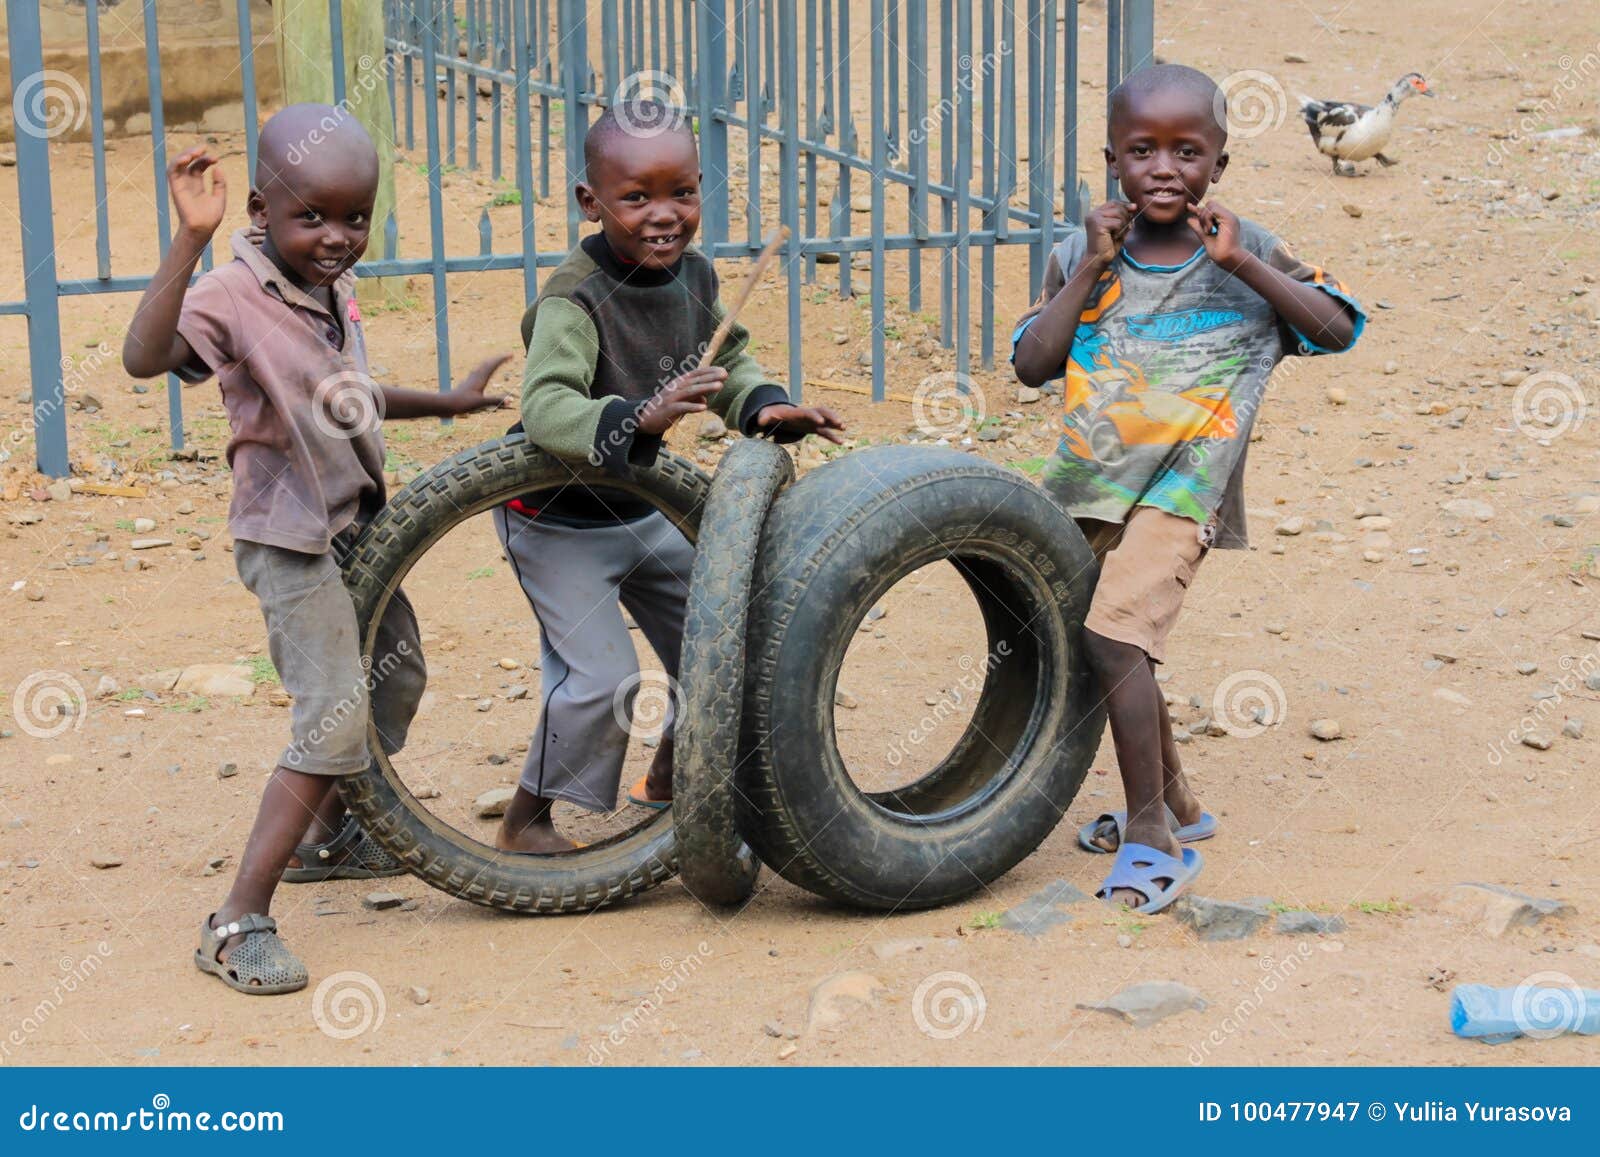 https://thumbs.dreamstime.com/z/african-poor-boys-play-wheels-small-children-girls-street-slum-people-village-life-100477947.jpg